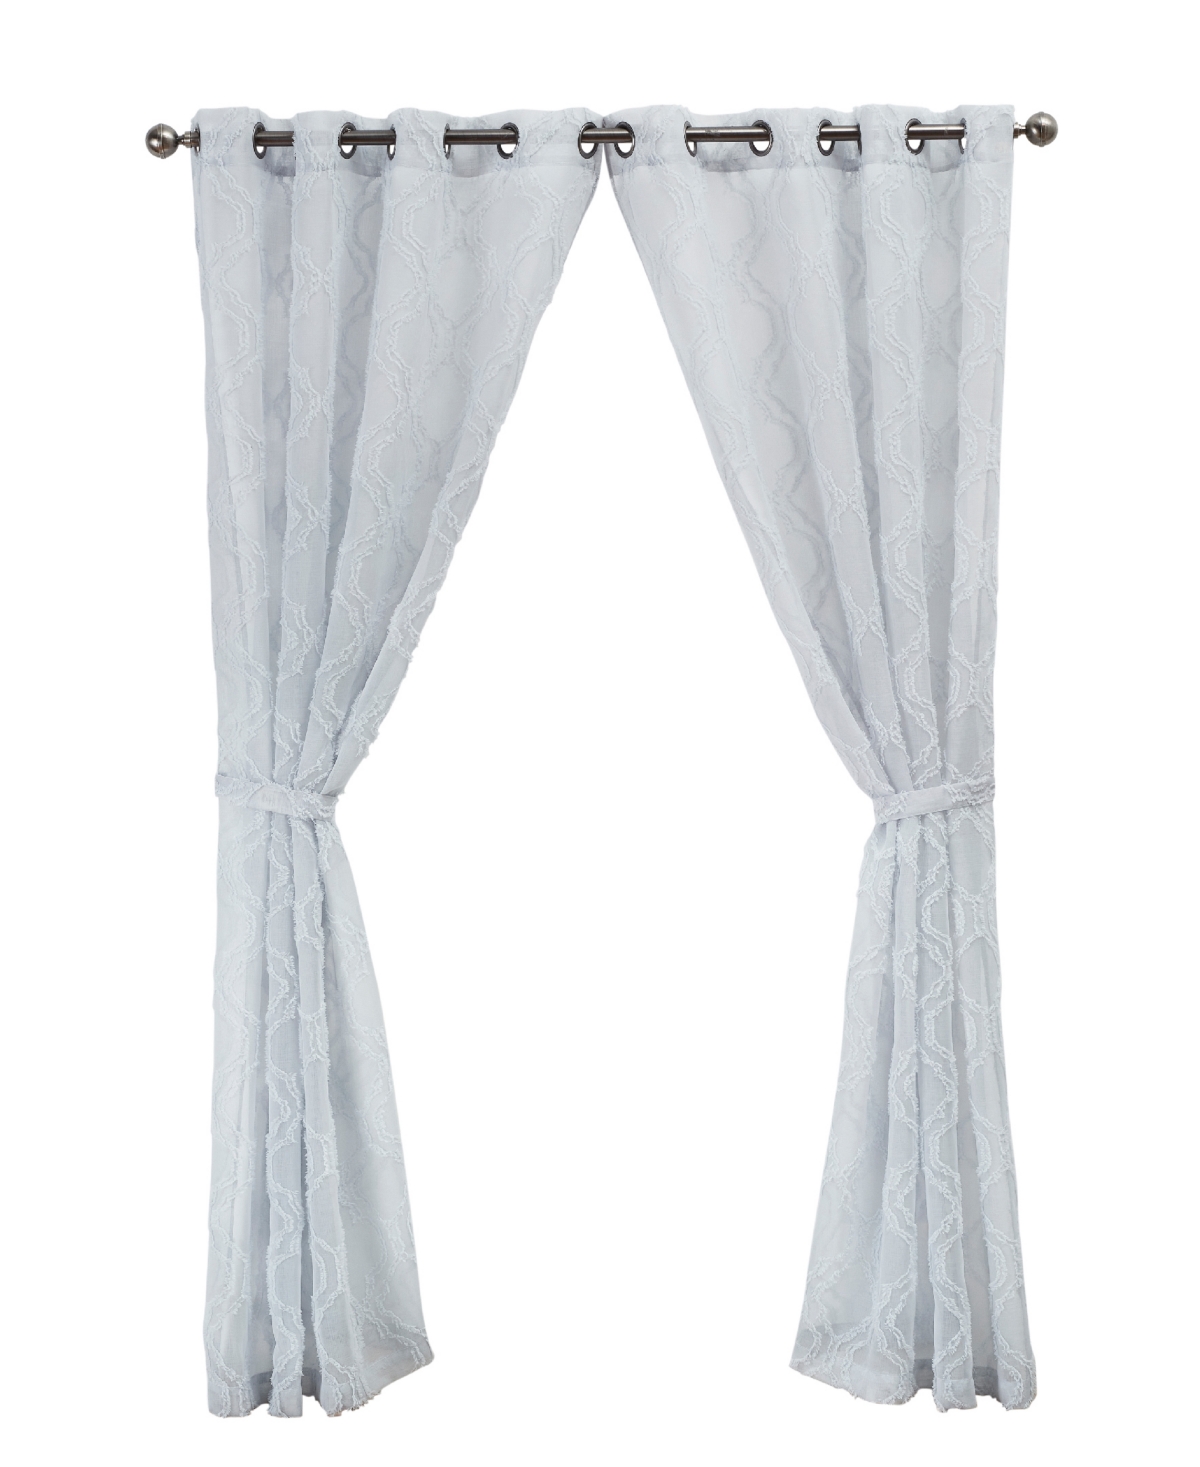 Jessica Simpson Everyn Sheer Embellished Grommet Window Curtain Panel Pair With Tiebacks, 52" X 84" In Light Gray